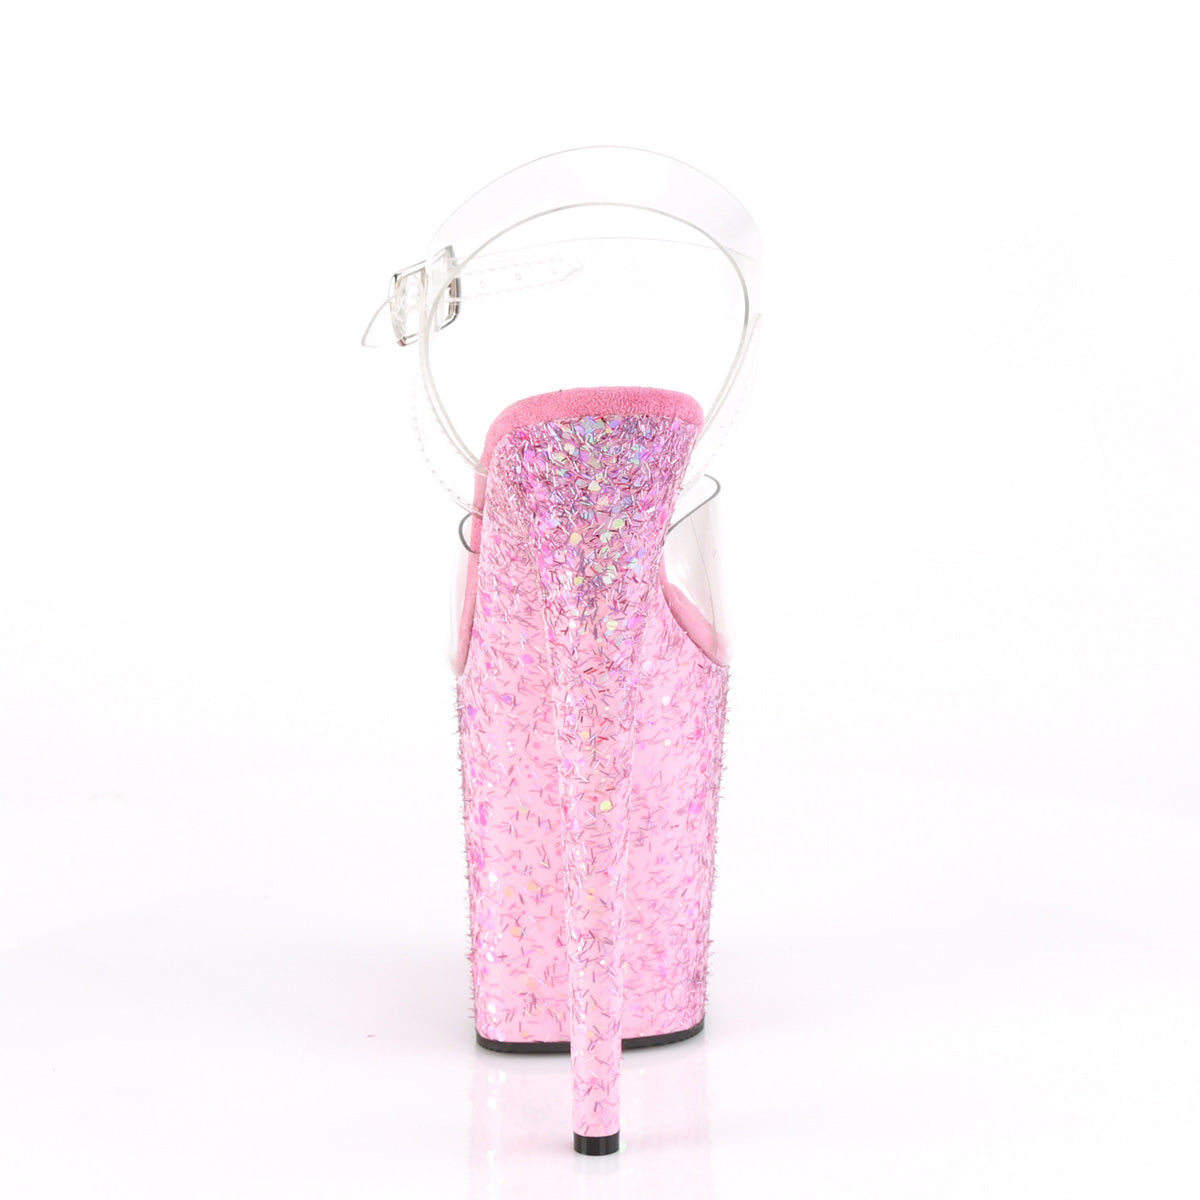 8 Inch Heel FLAMINGO-808CF Clear Pink Confetti